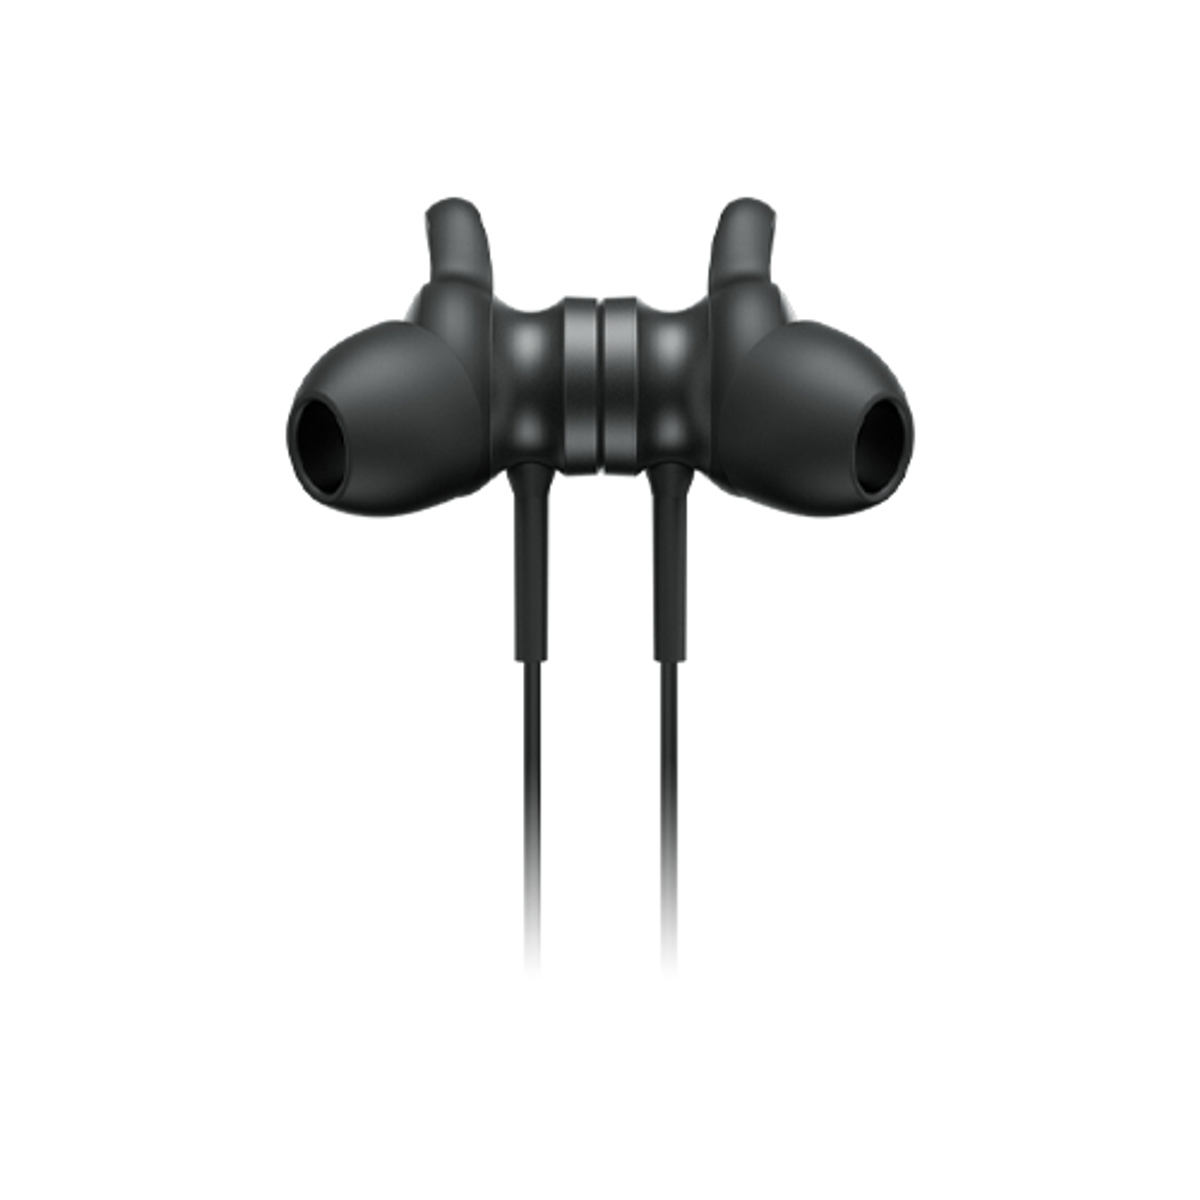 BT In-Ear Headphones